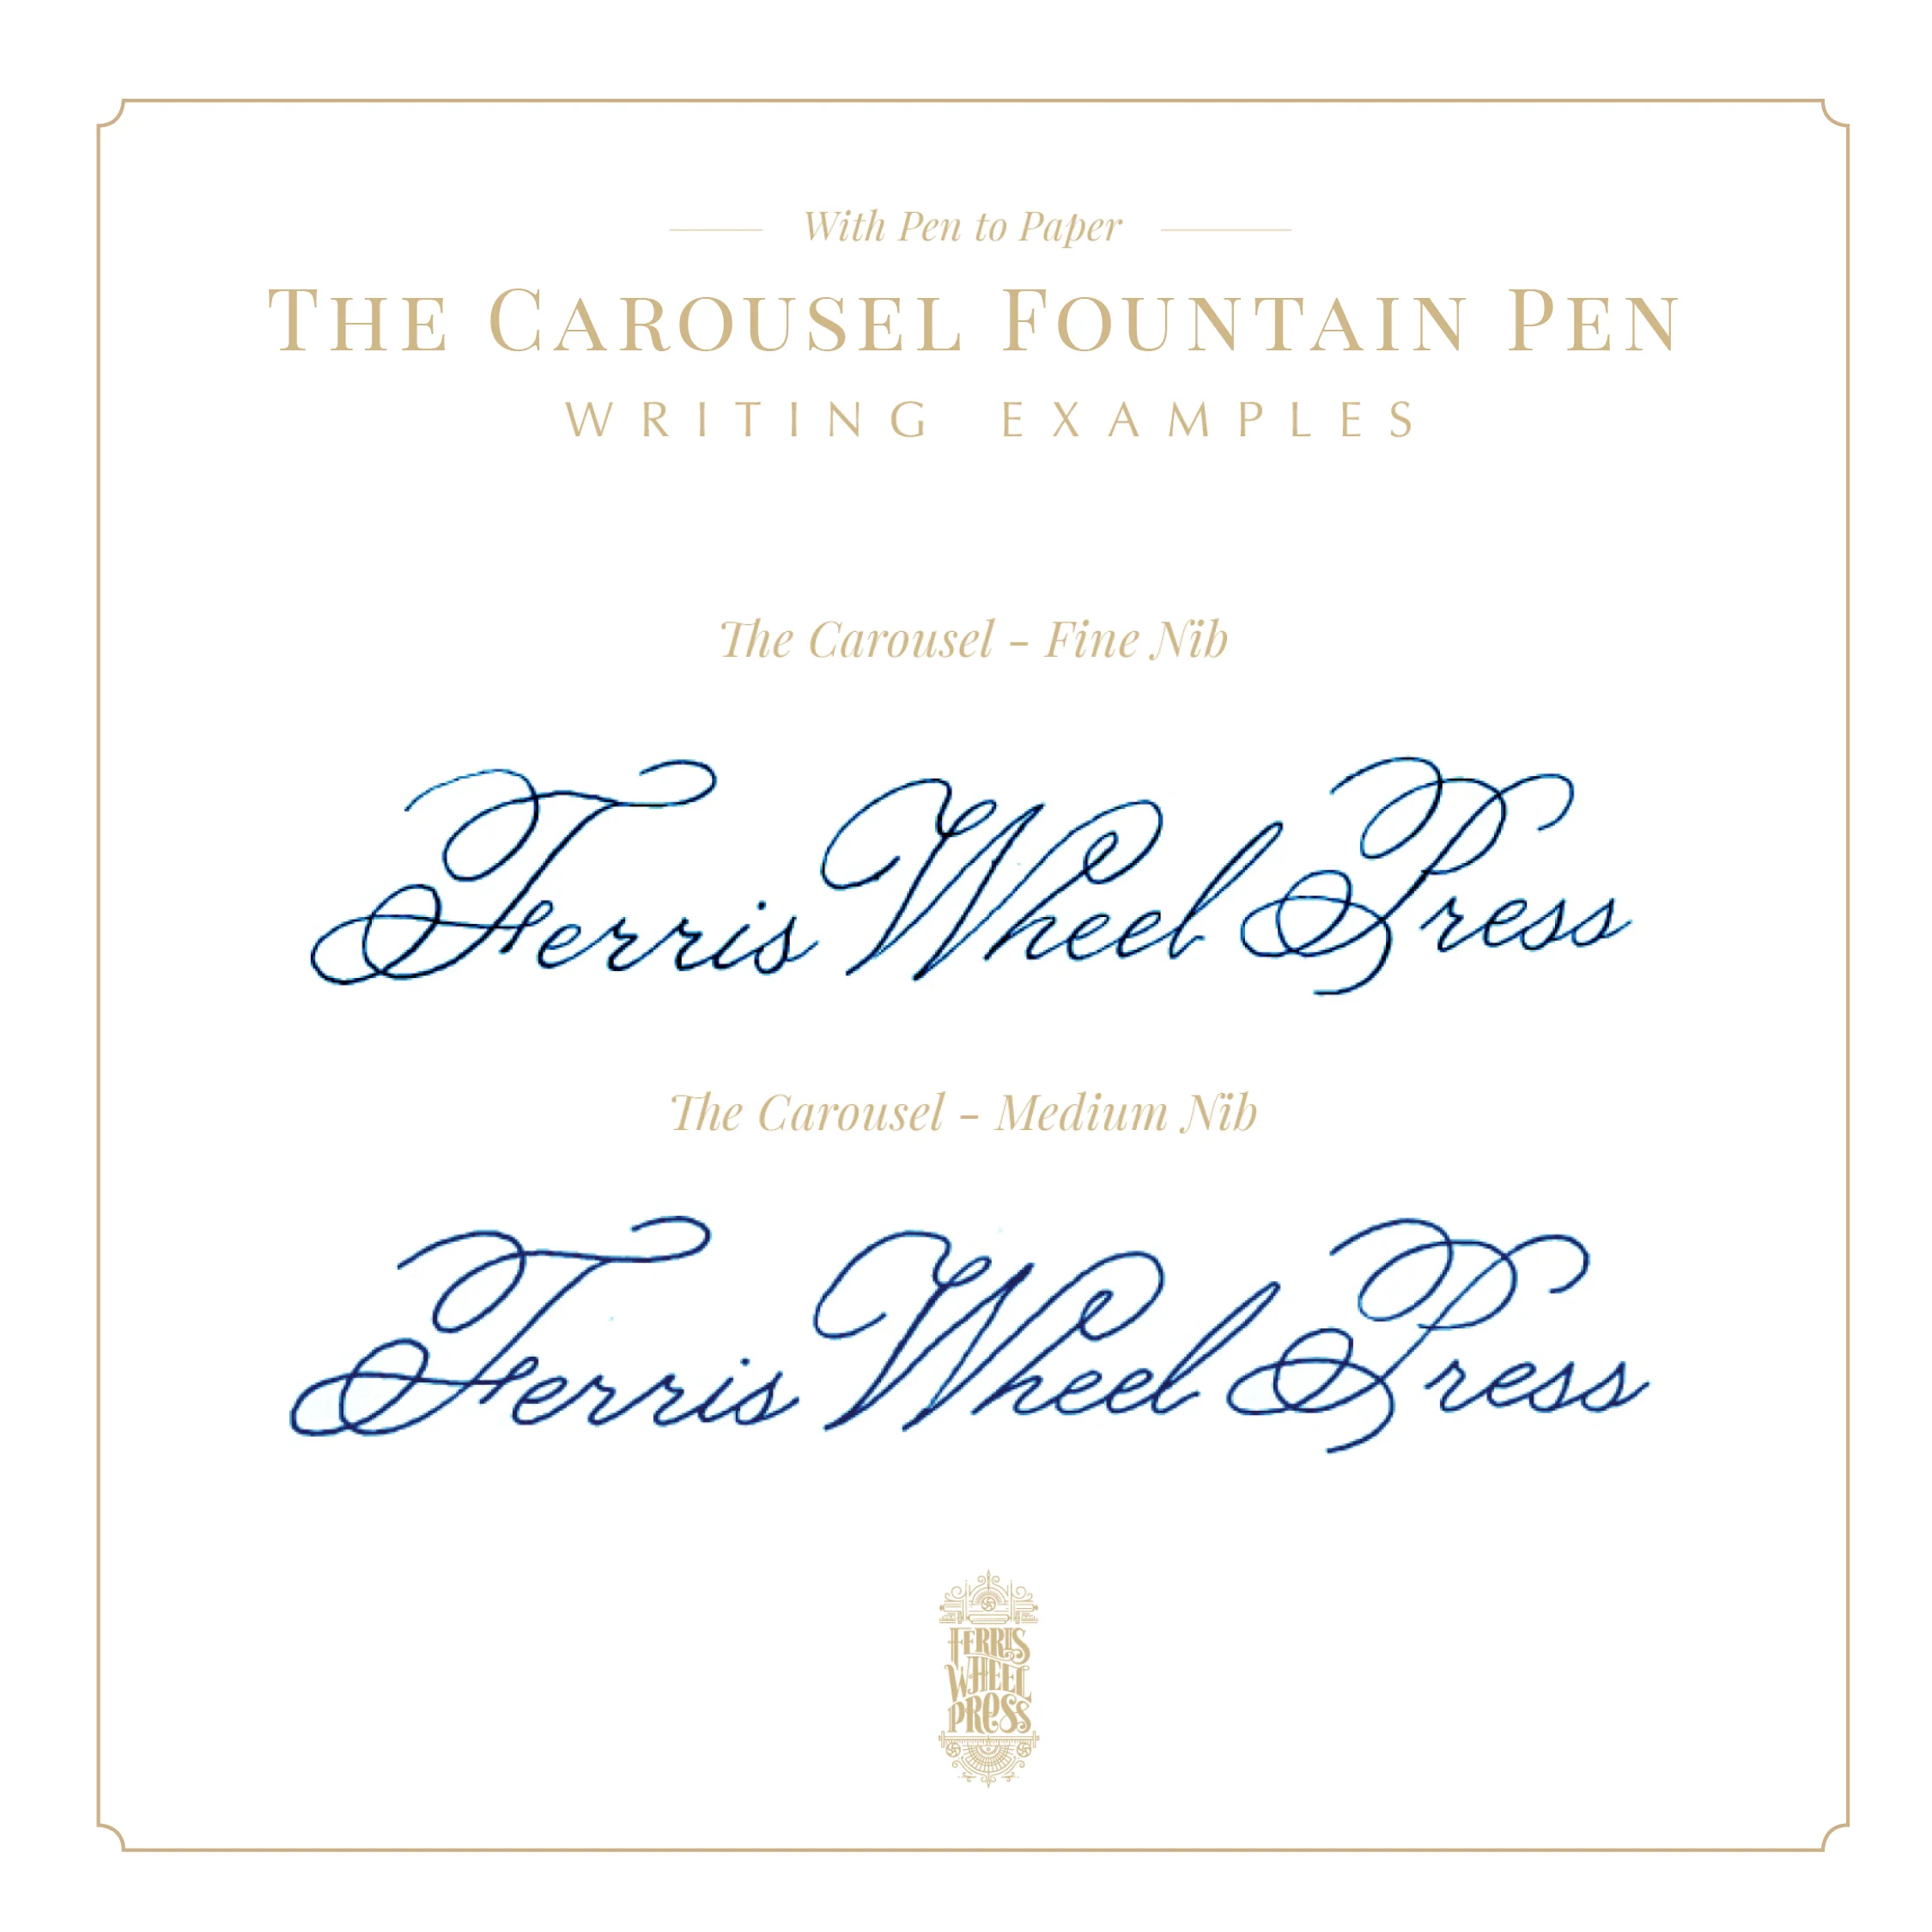 Ferris Wheel Press - Limited Edition | Aluminum Carousel Fountain Pen - Glistening Glass